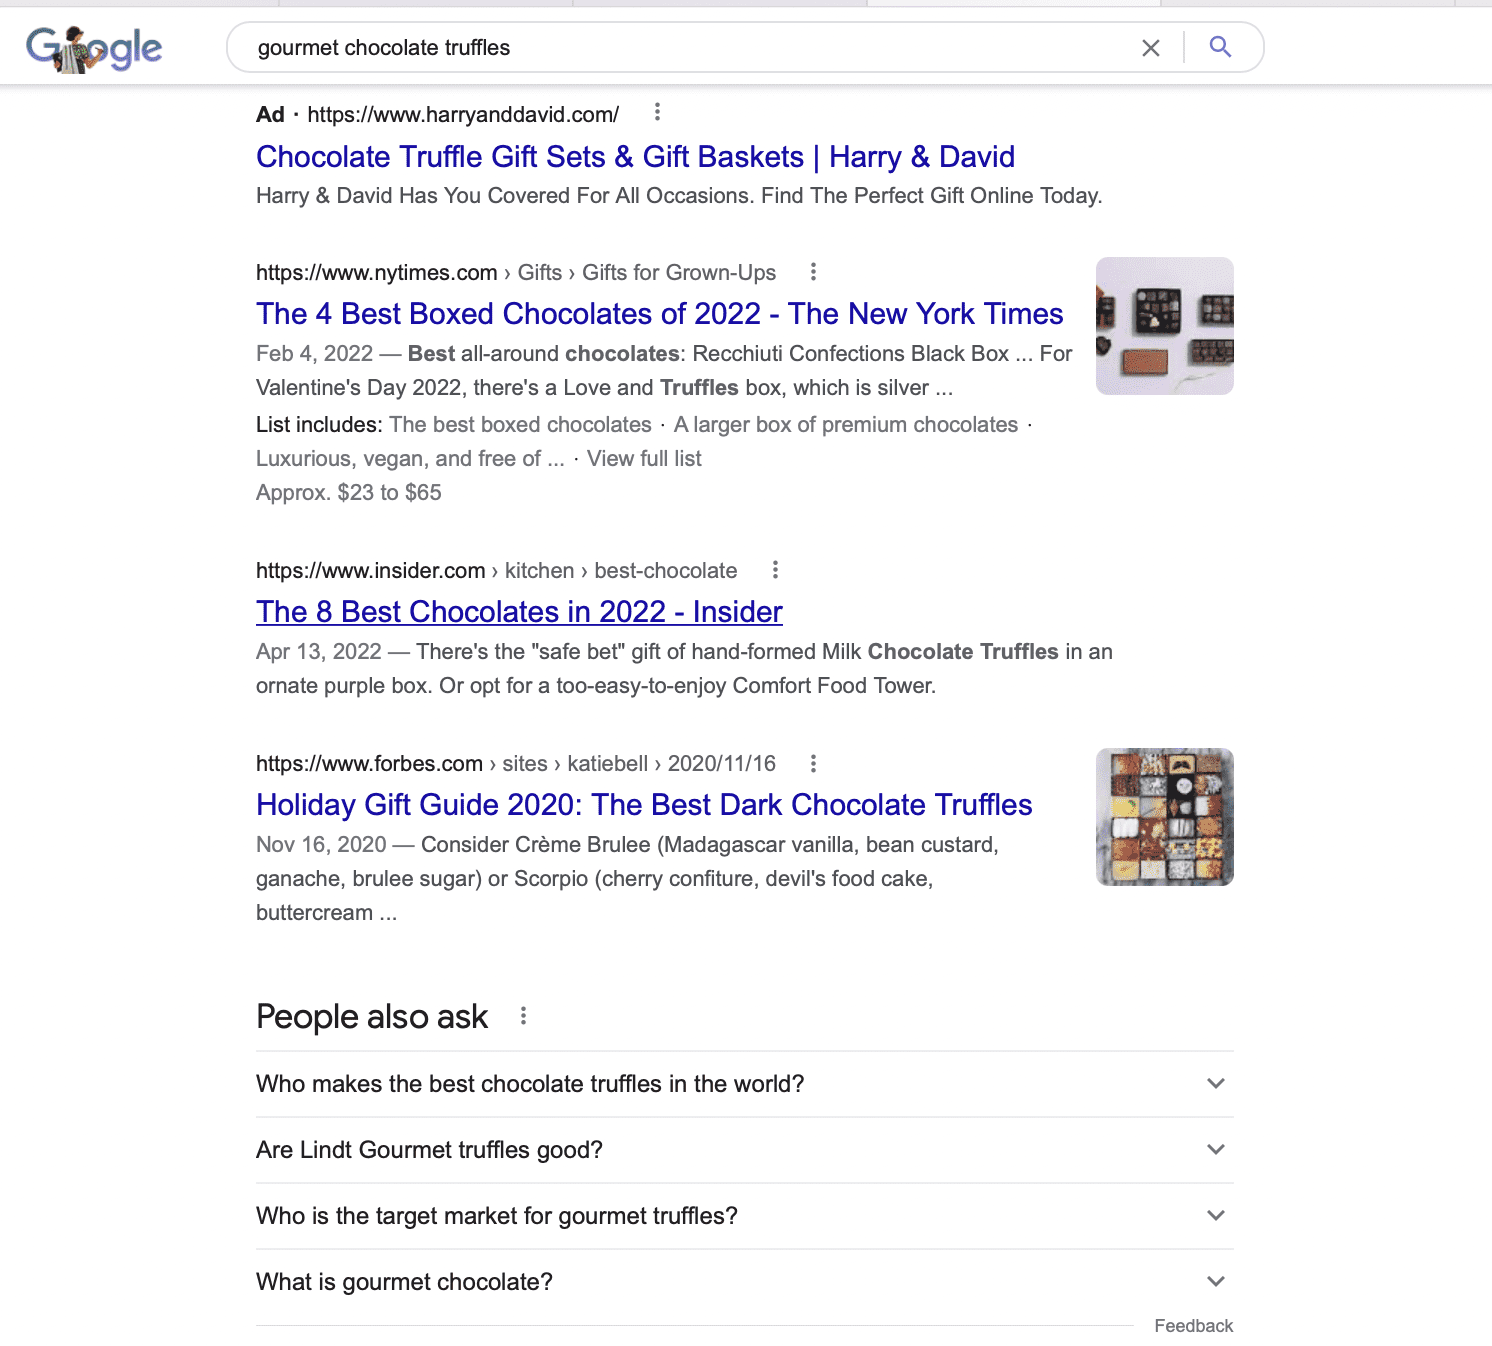 informational google organic listings for "gourmet chocolate truffles"